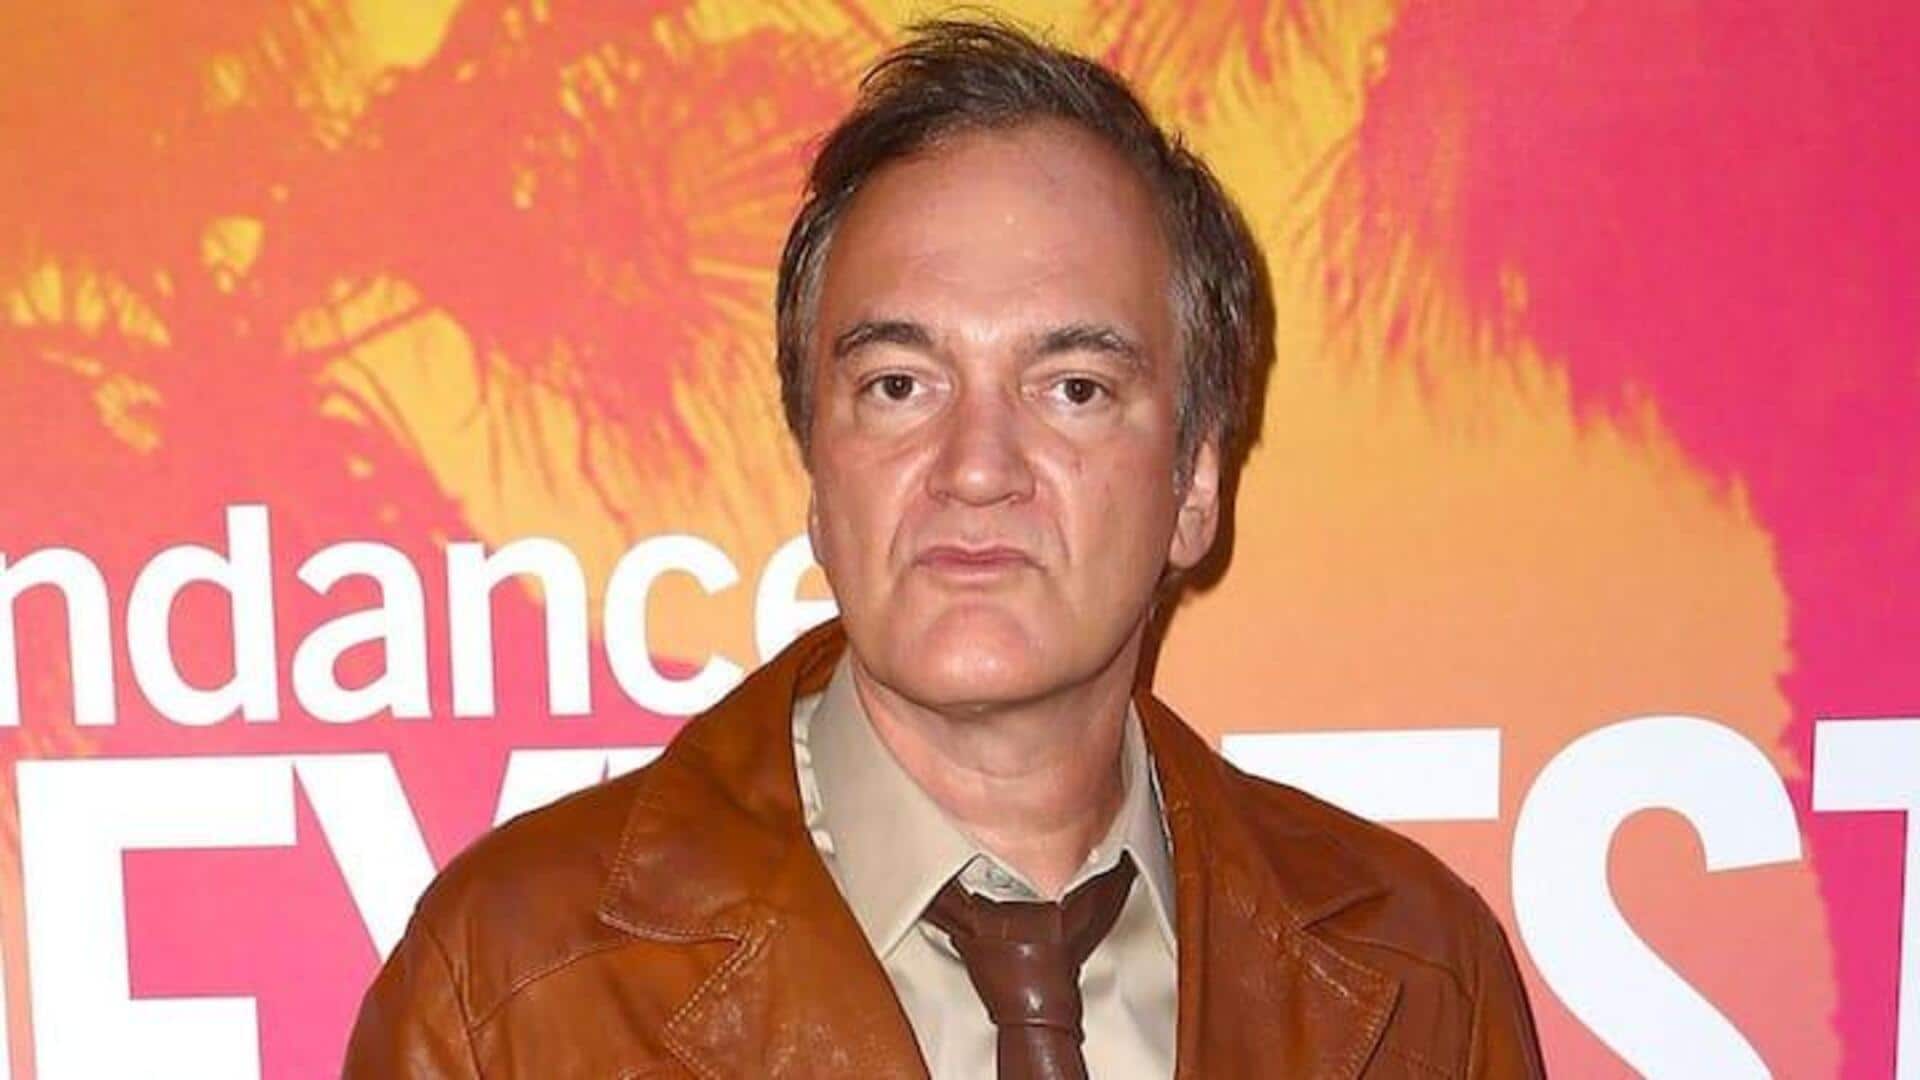 Quentin Tarantino drops 'The Movie Critic' as final film project